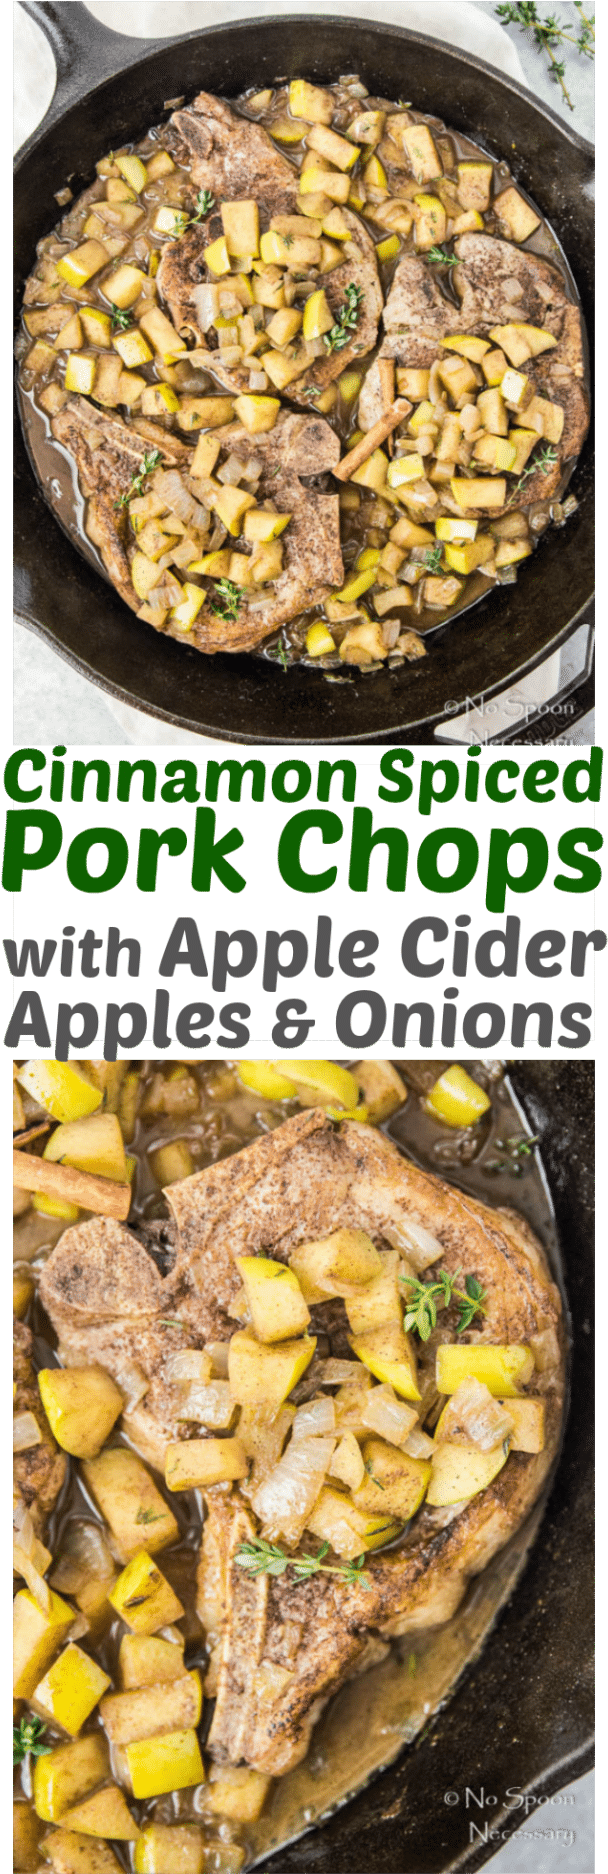 Cinnamon Spiced Pork Chopswith Apple Cider PNG